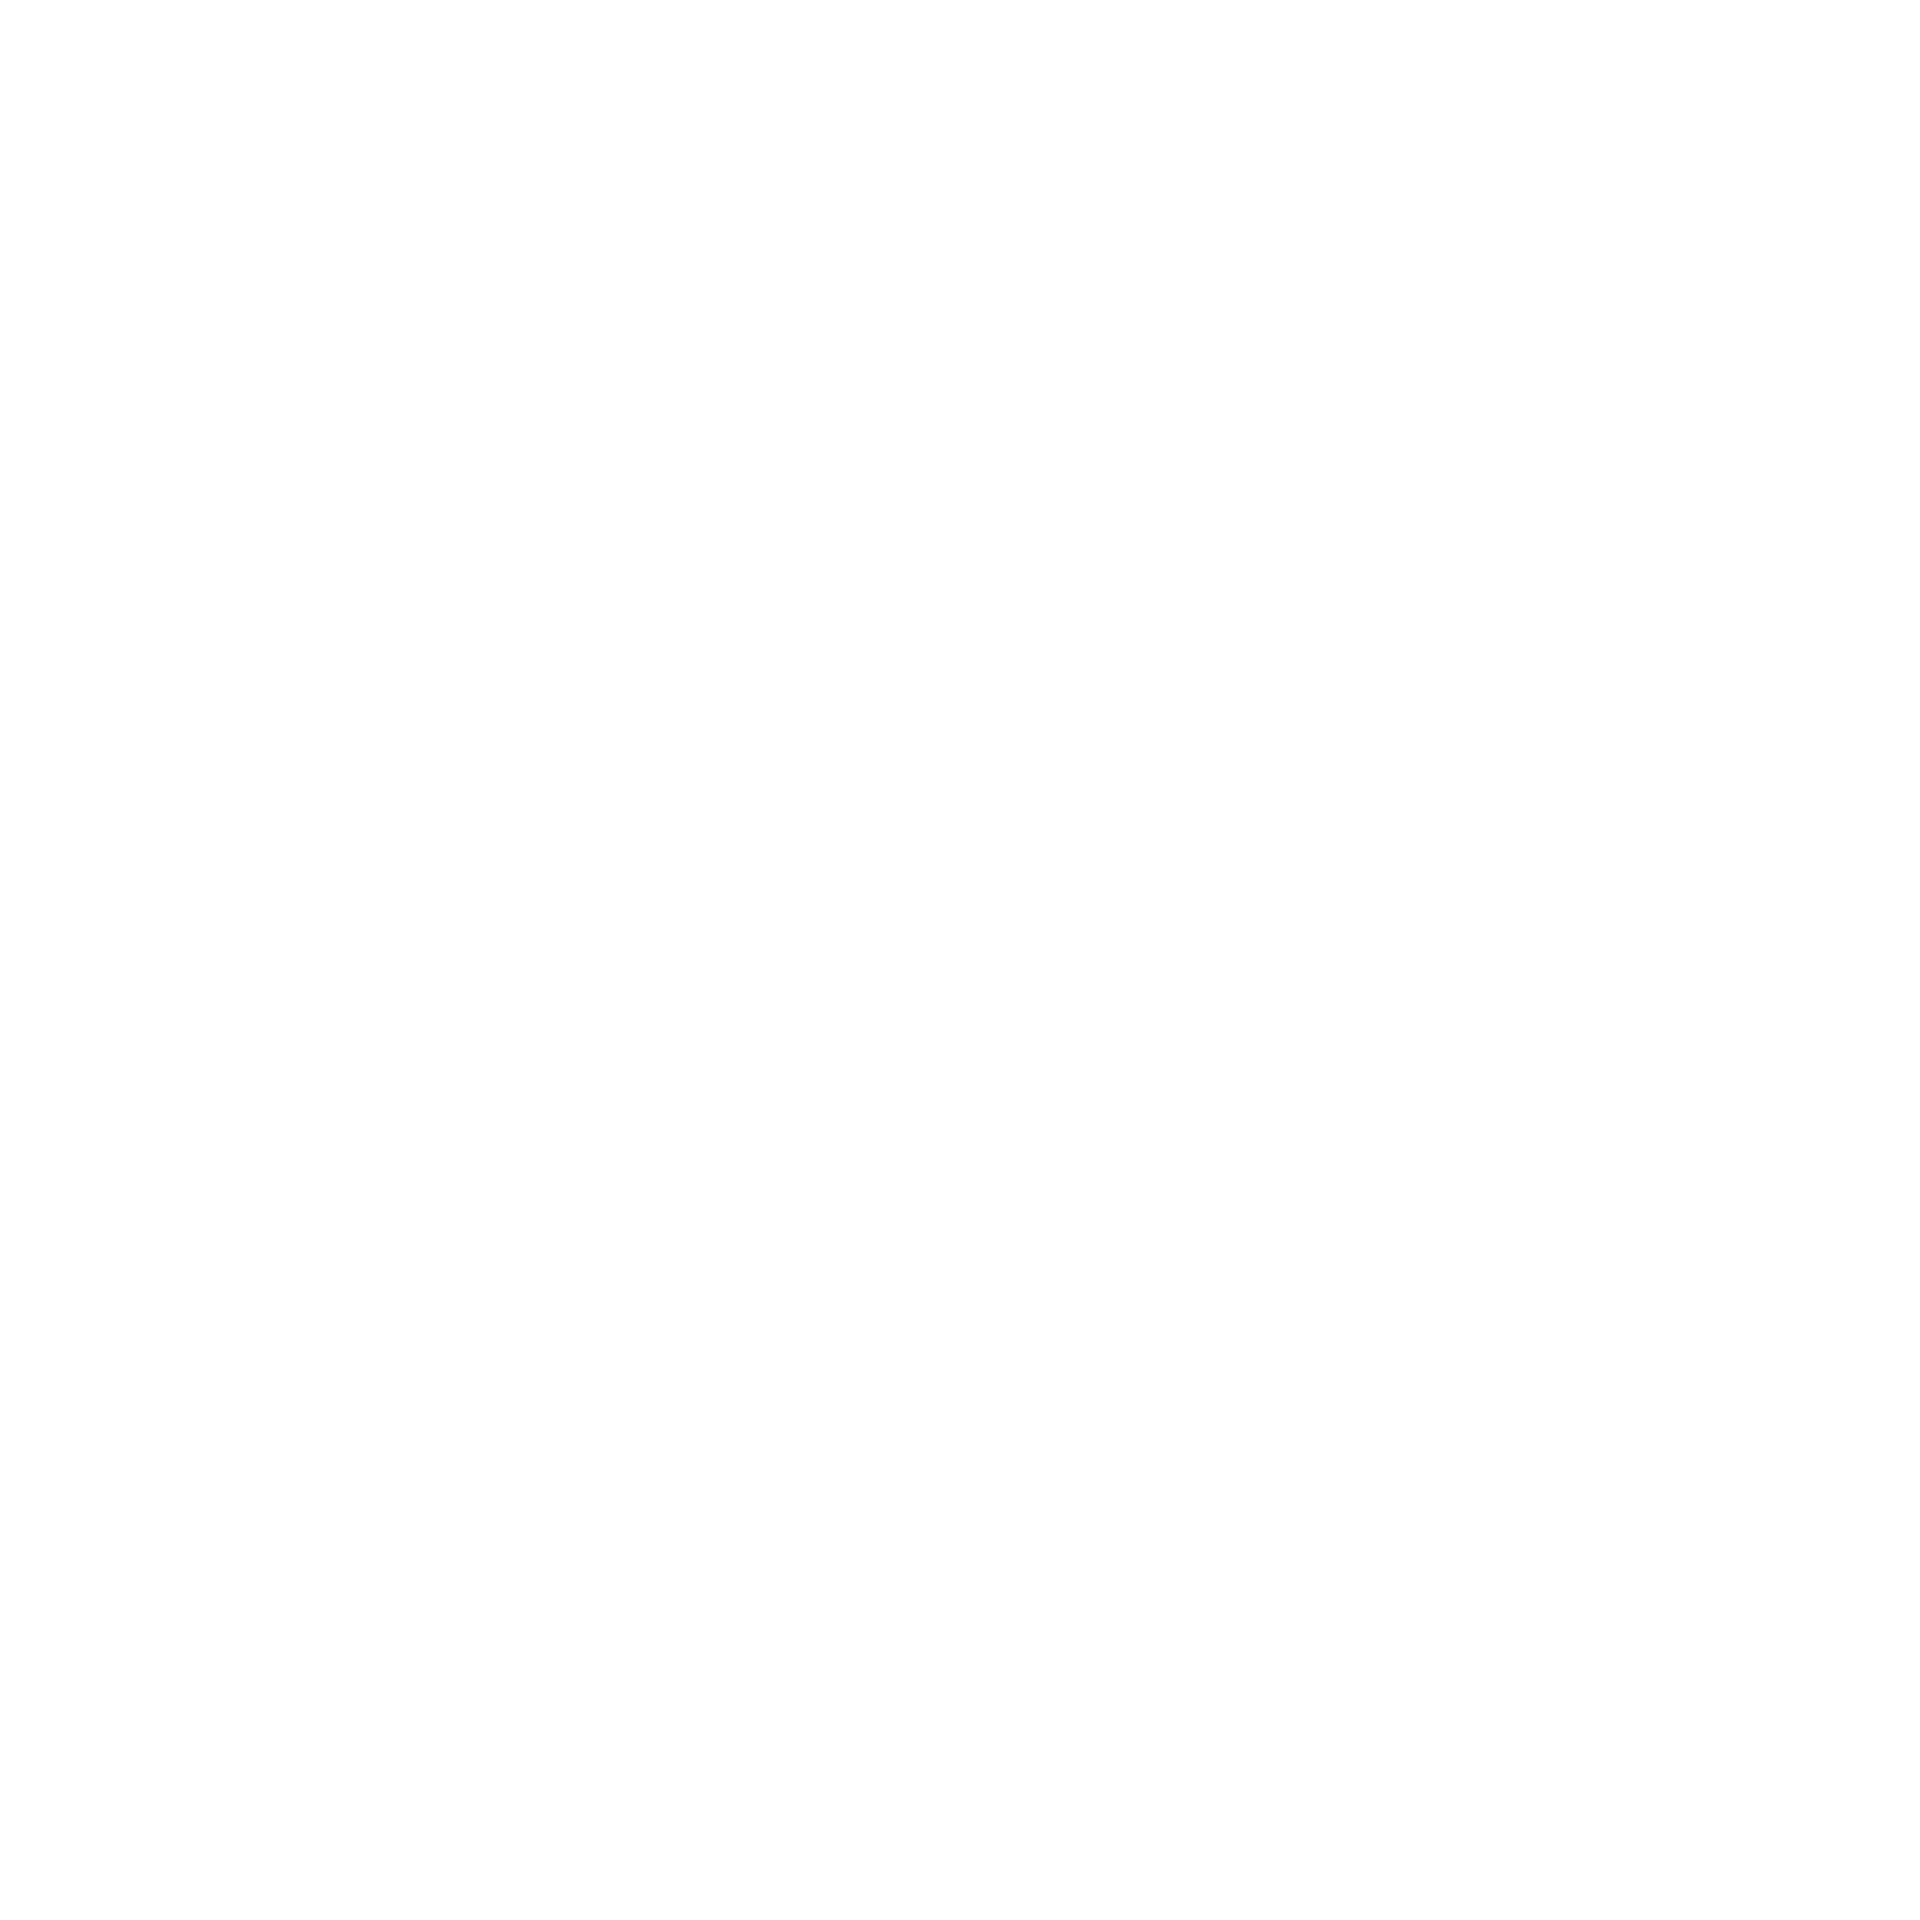 fwords